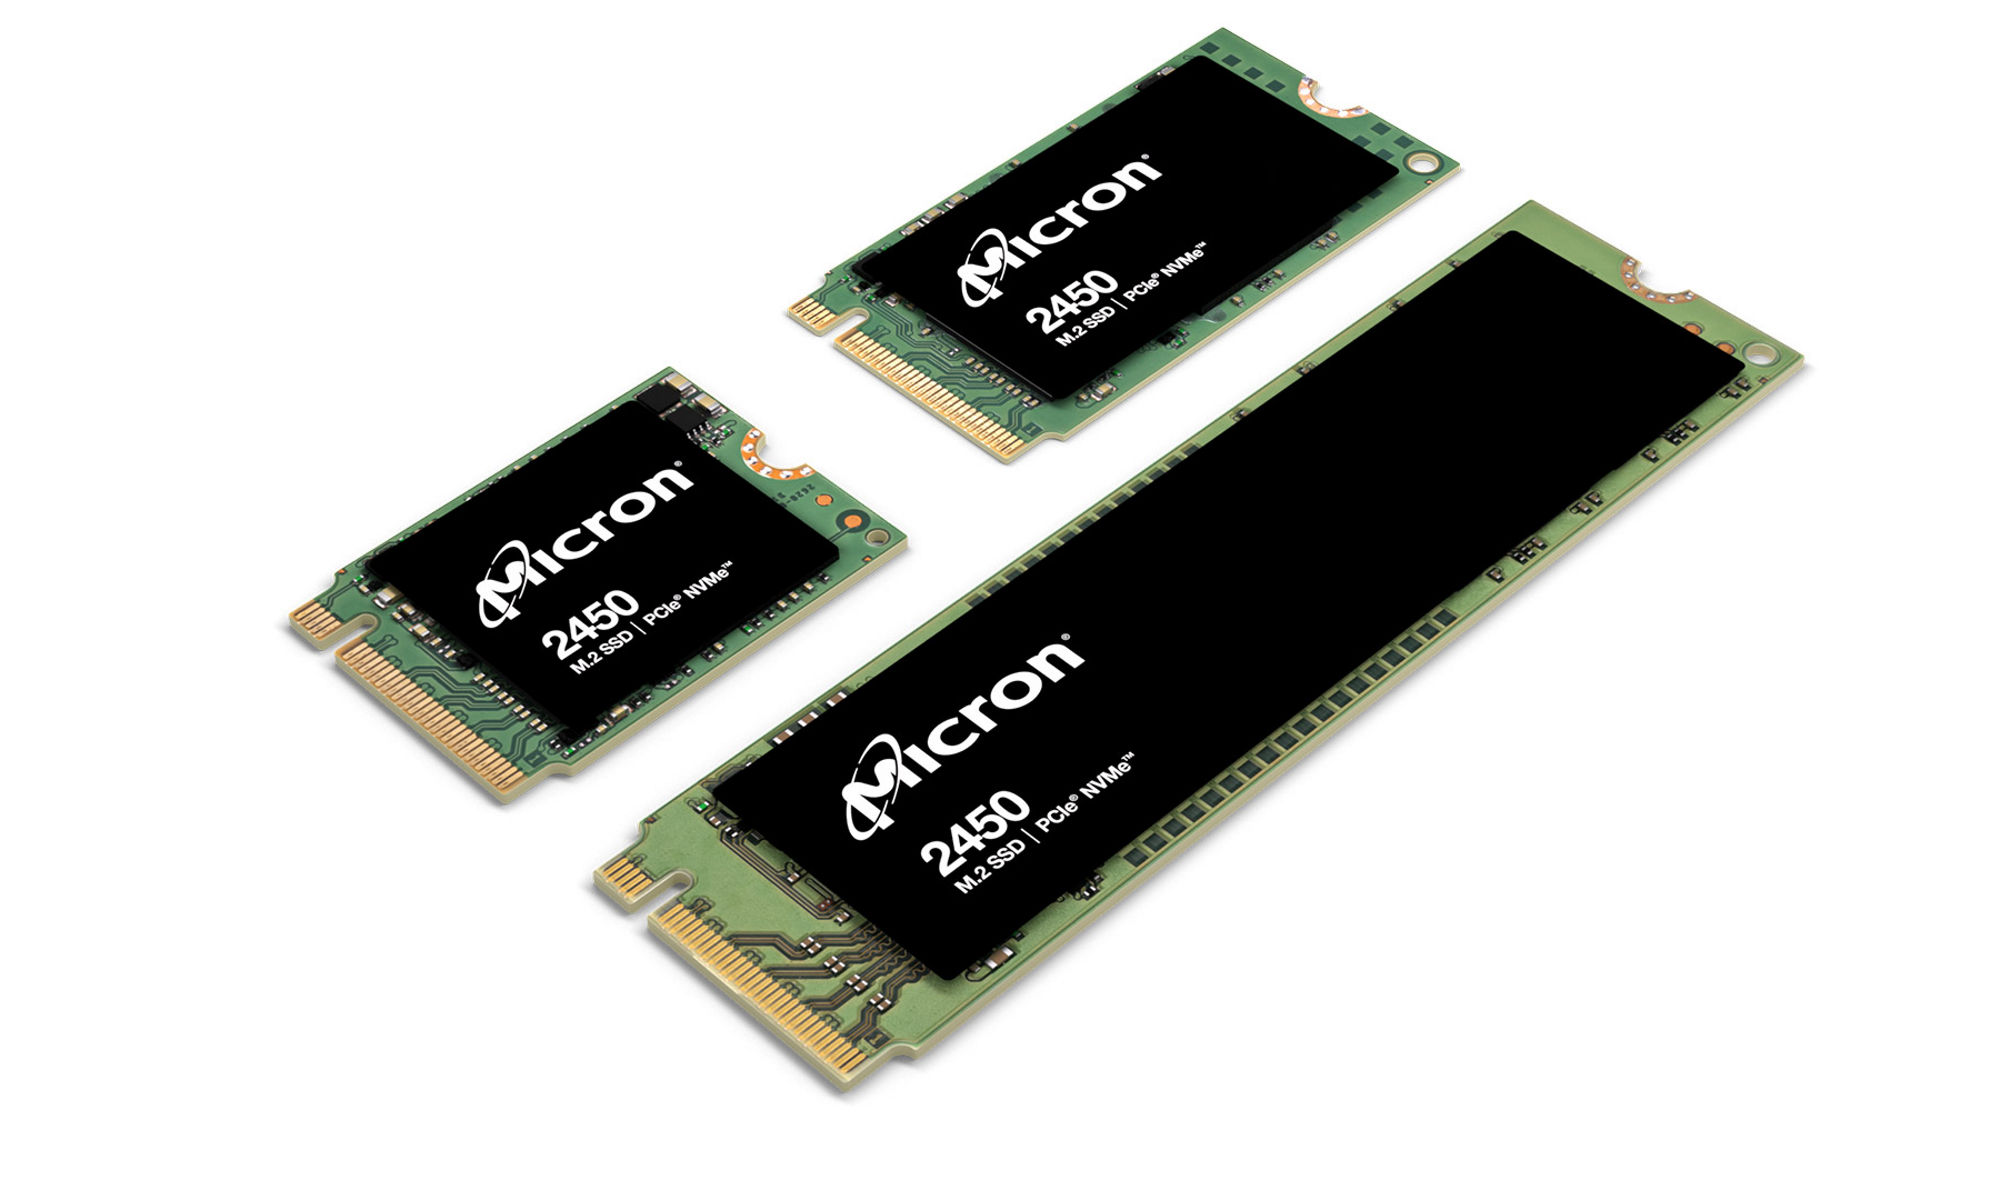 Micron 2450 SSDs